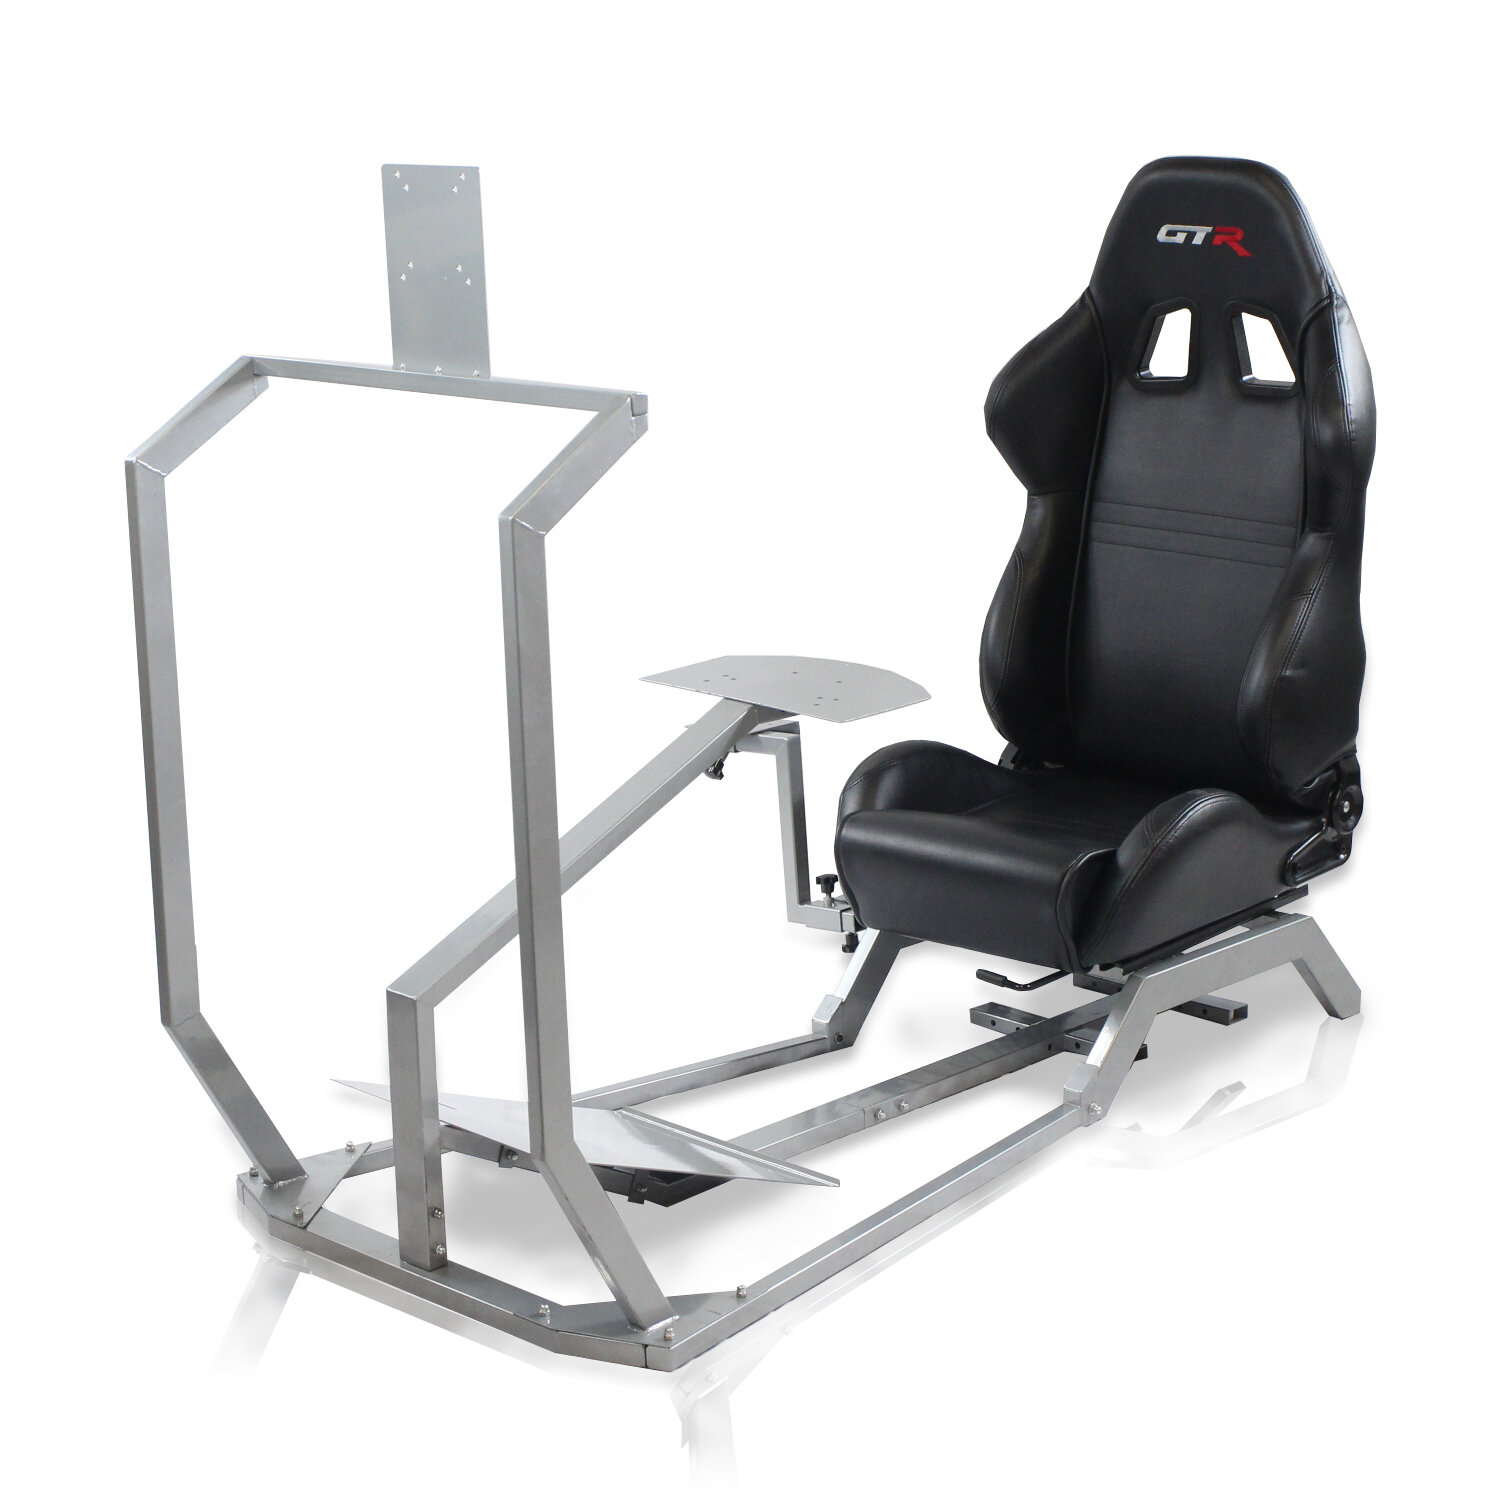 Gtr Simulator Gt Model With Real Racing Seat Floor Game Chair Reviews Wayfair